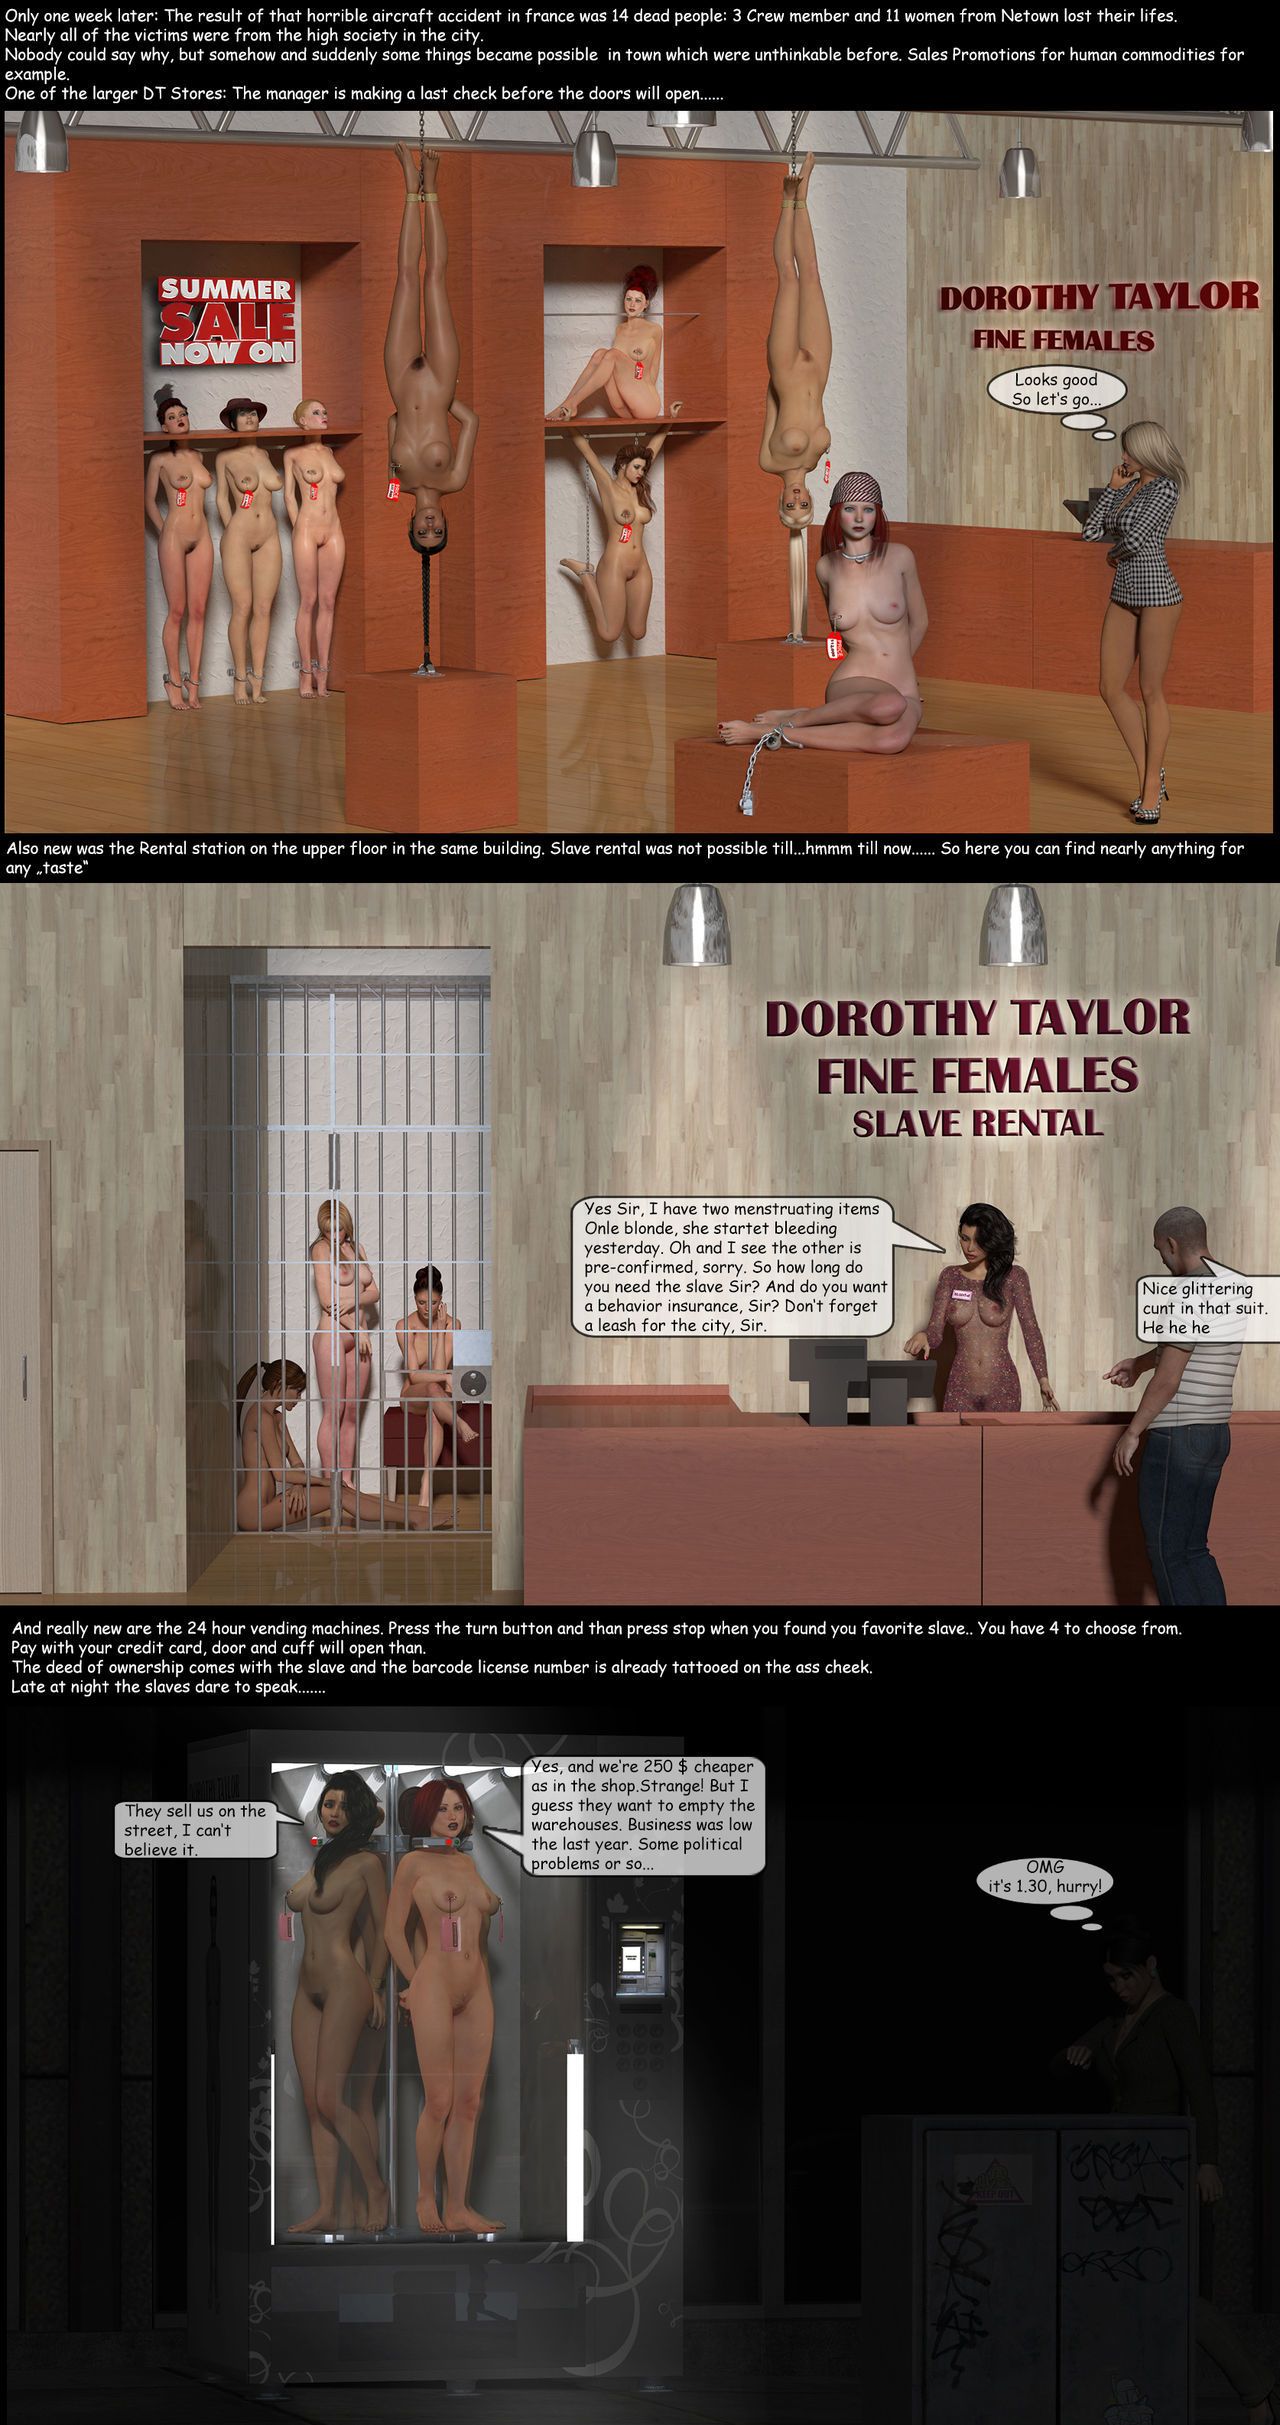 artistd chris dorothy Taylor la servitude esclave 2 en cours